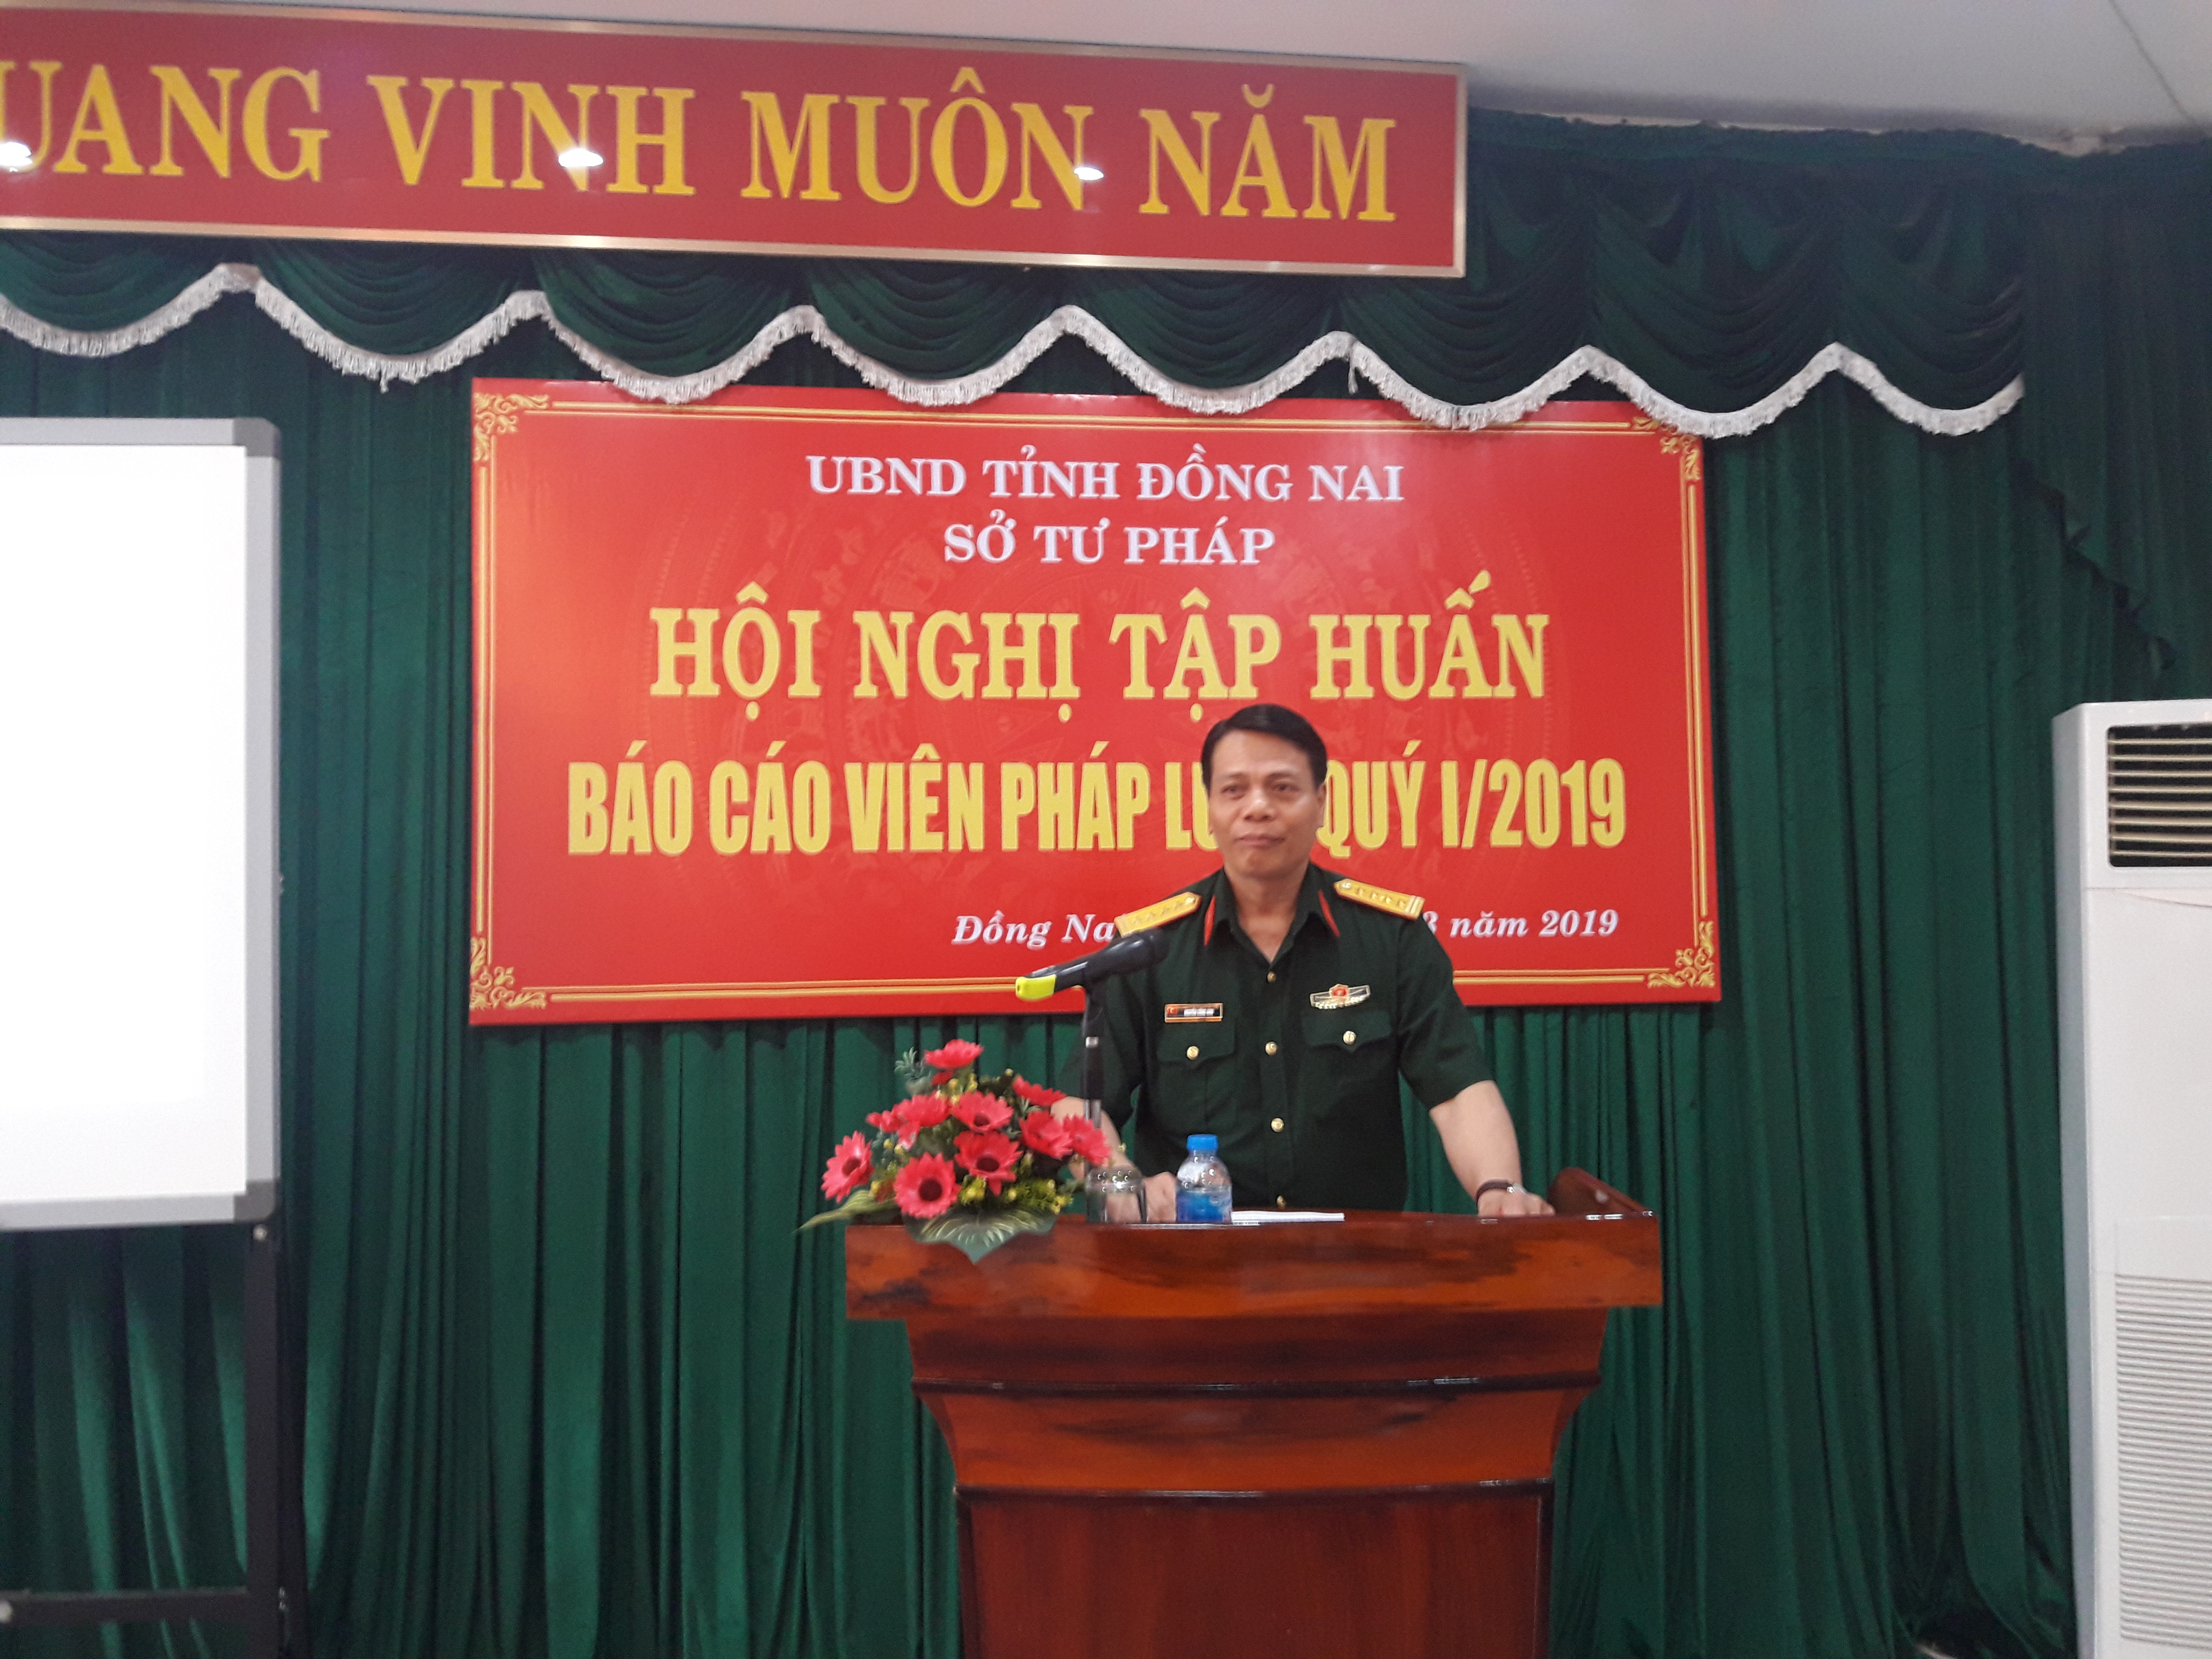 Hoi nghi Bao cao vien PL 1-2019 - Nguyen Cong Anh.jpg